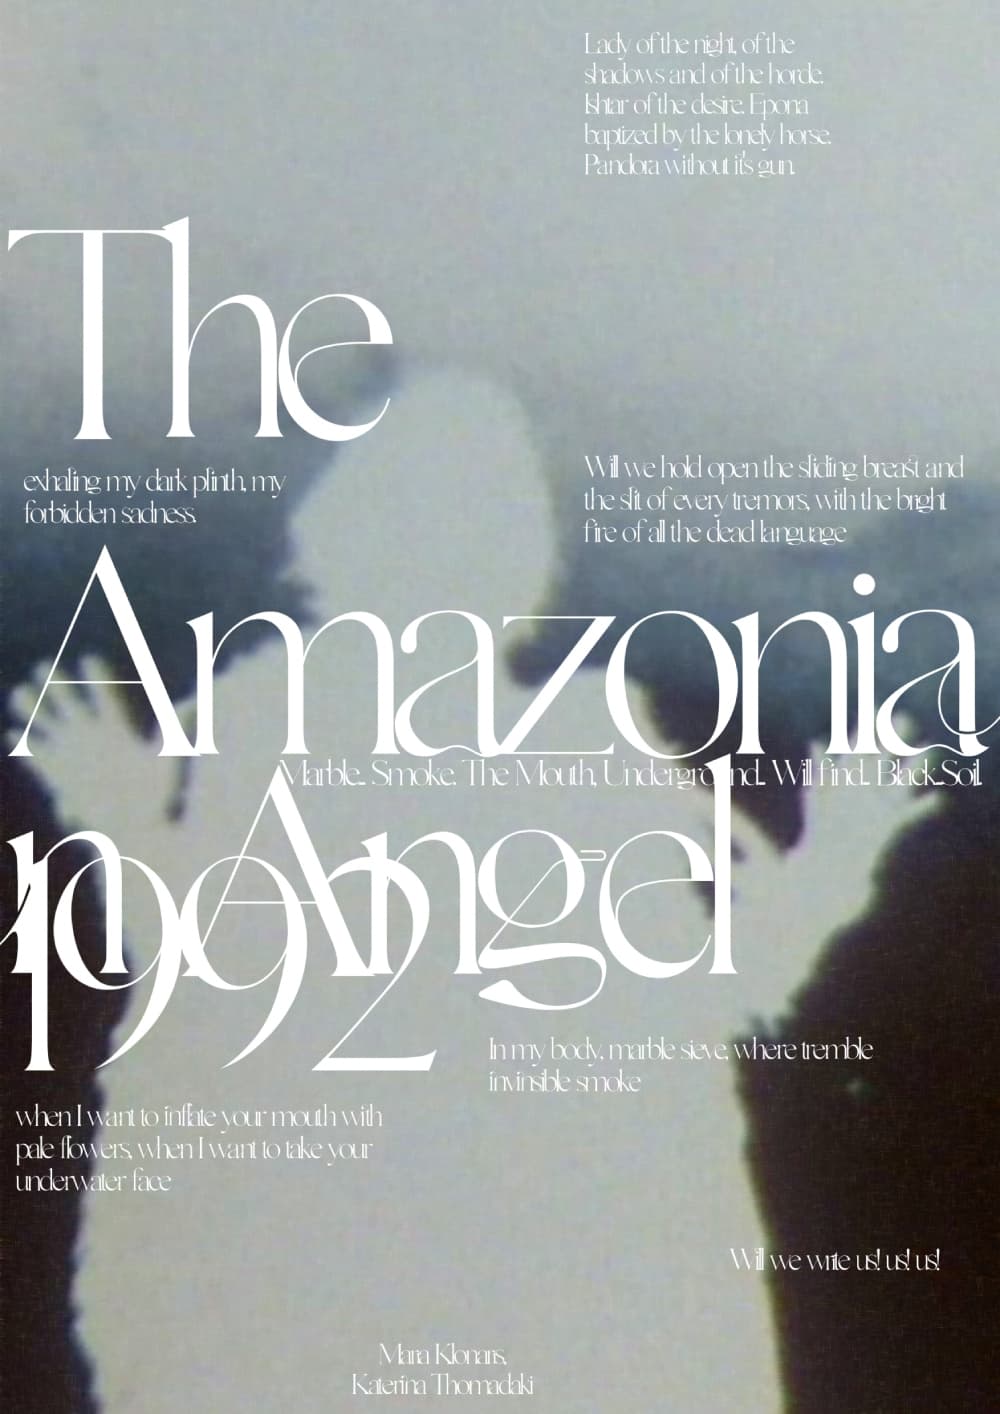 The Amazonian Angel